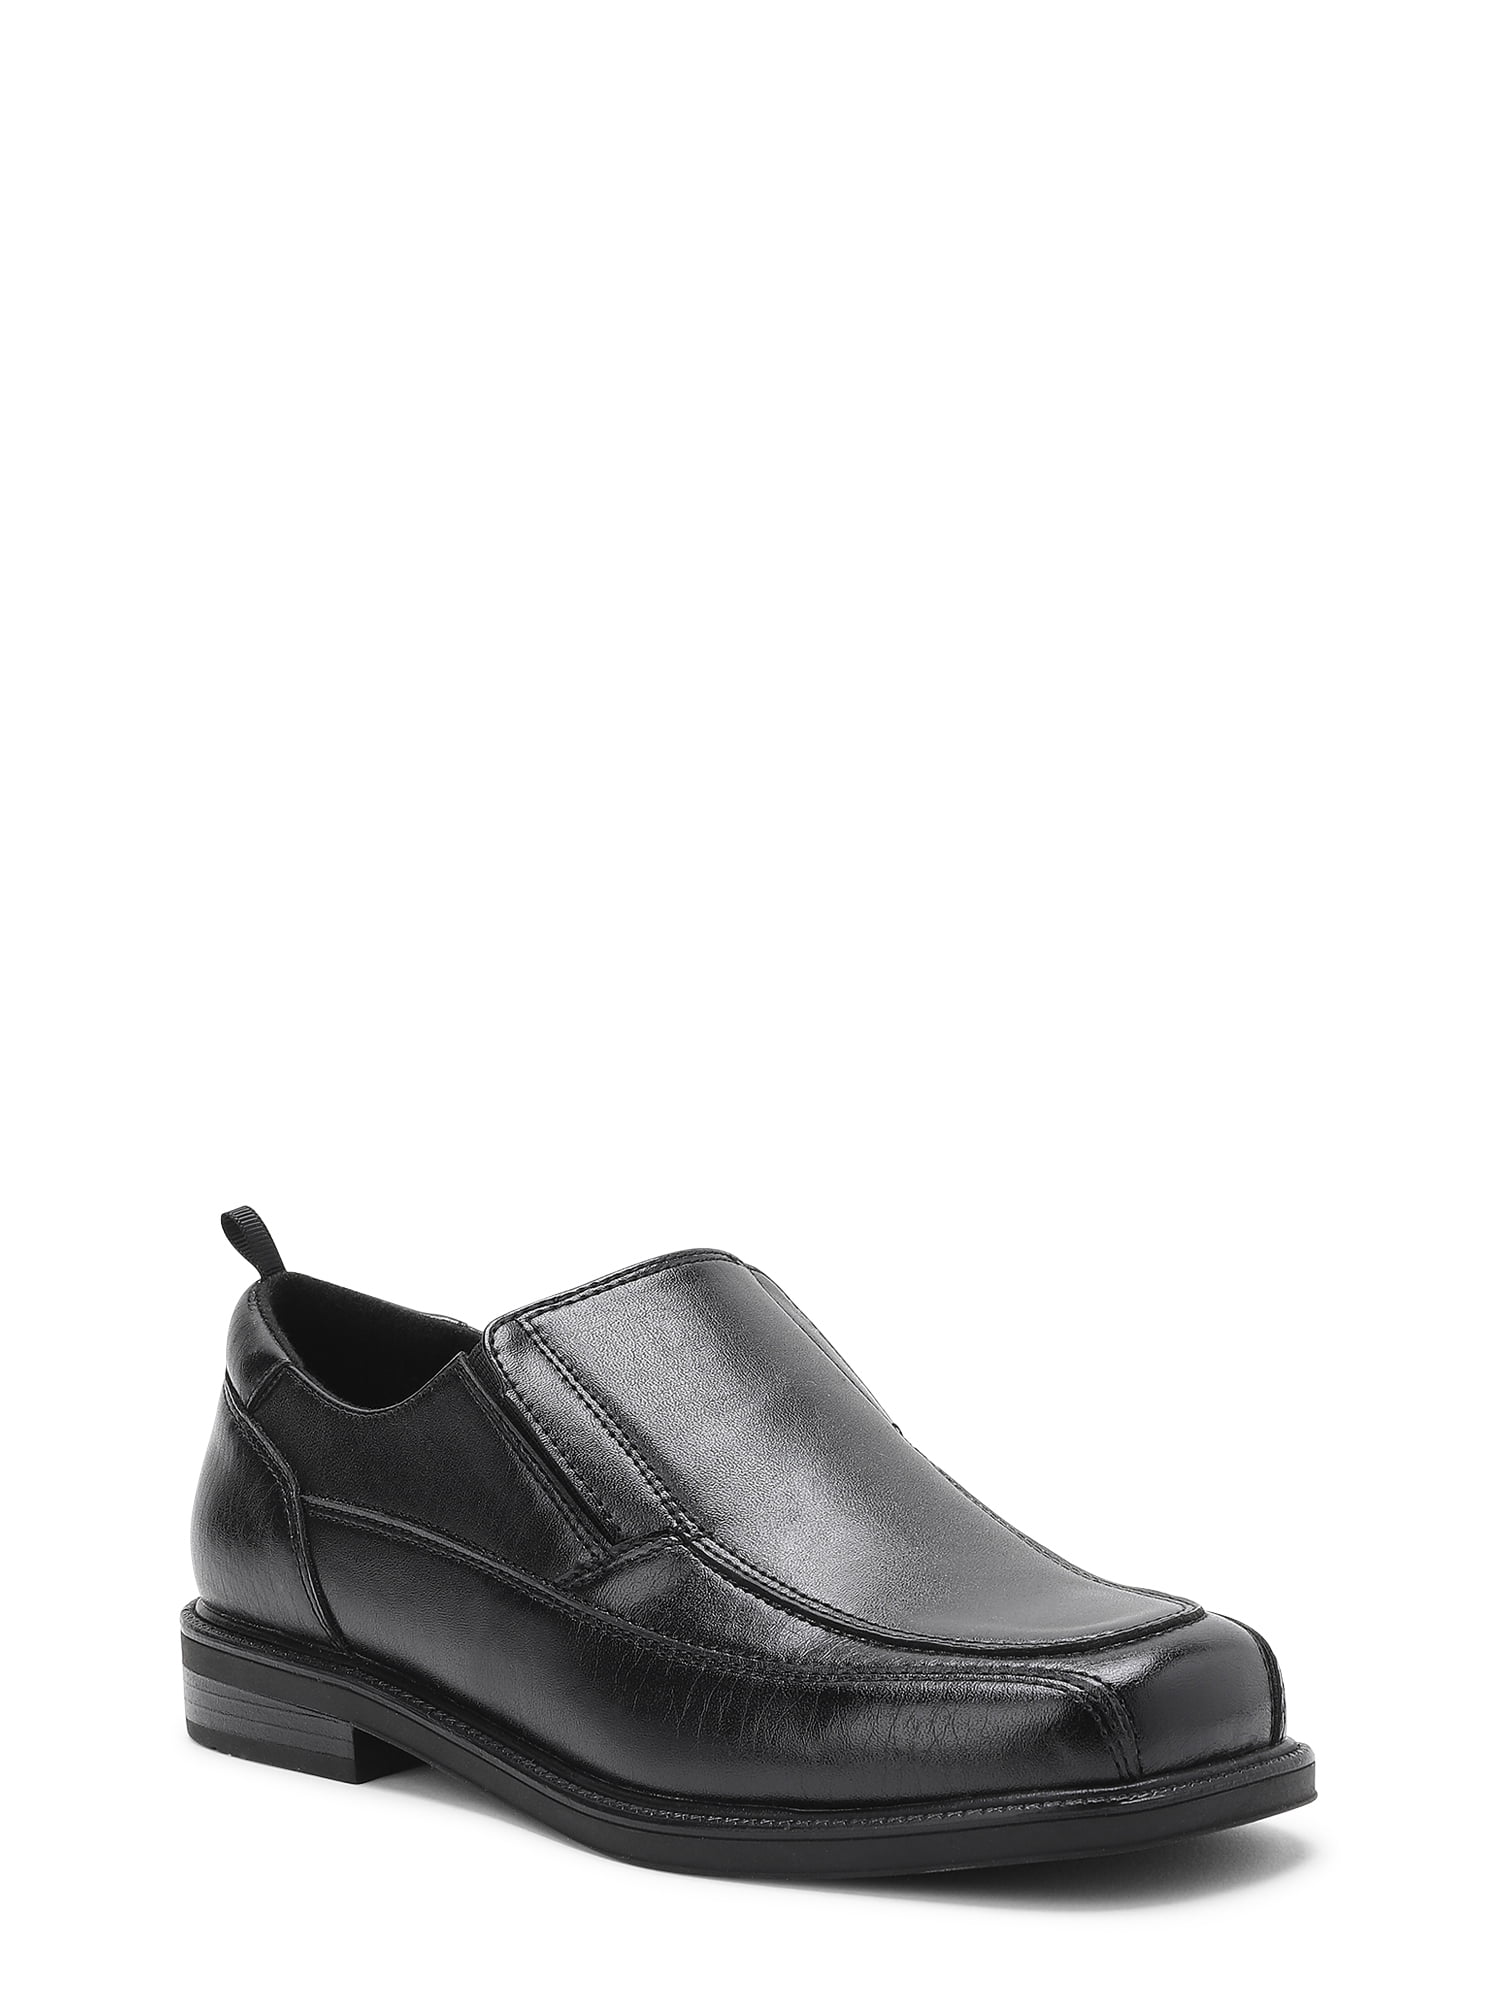 New Little Toddler Boys Classic Slip On Dress Loafers Formal Shoes Black White 